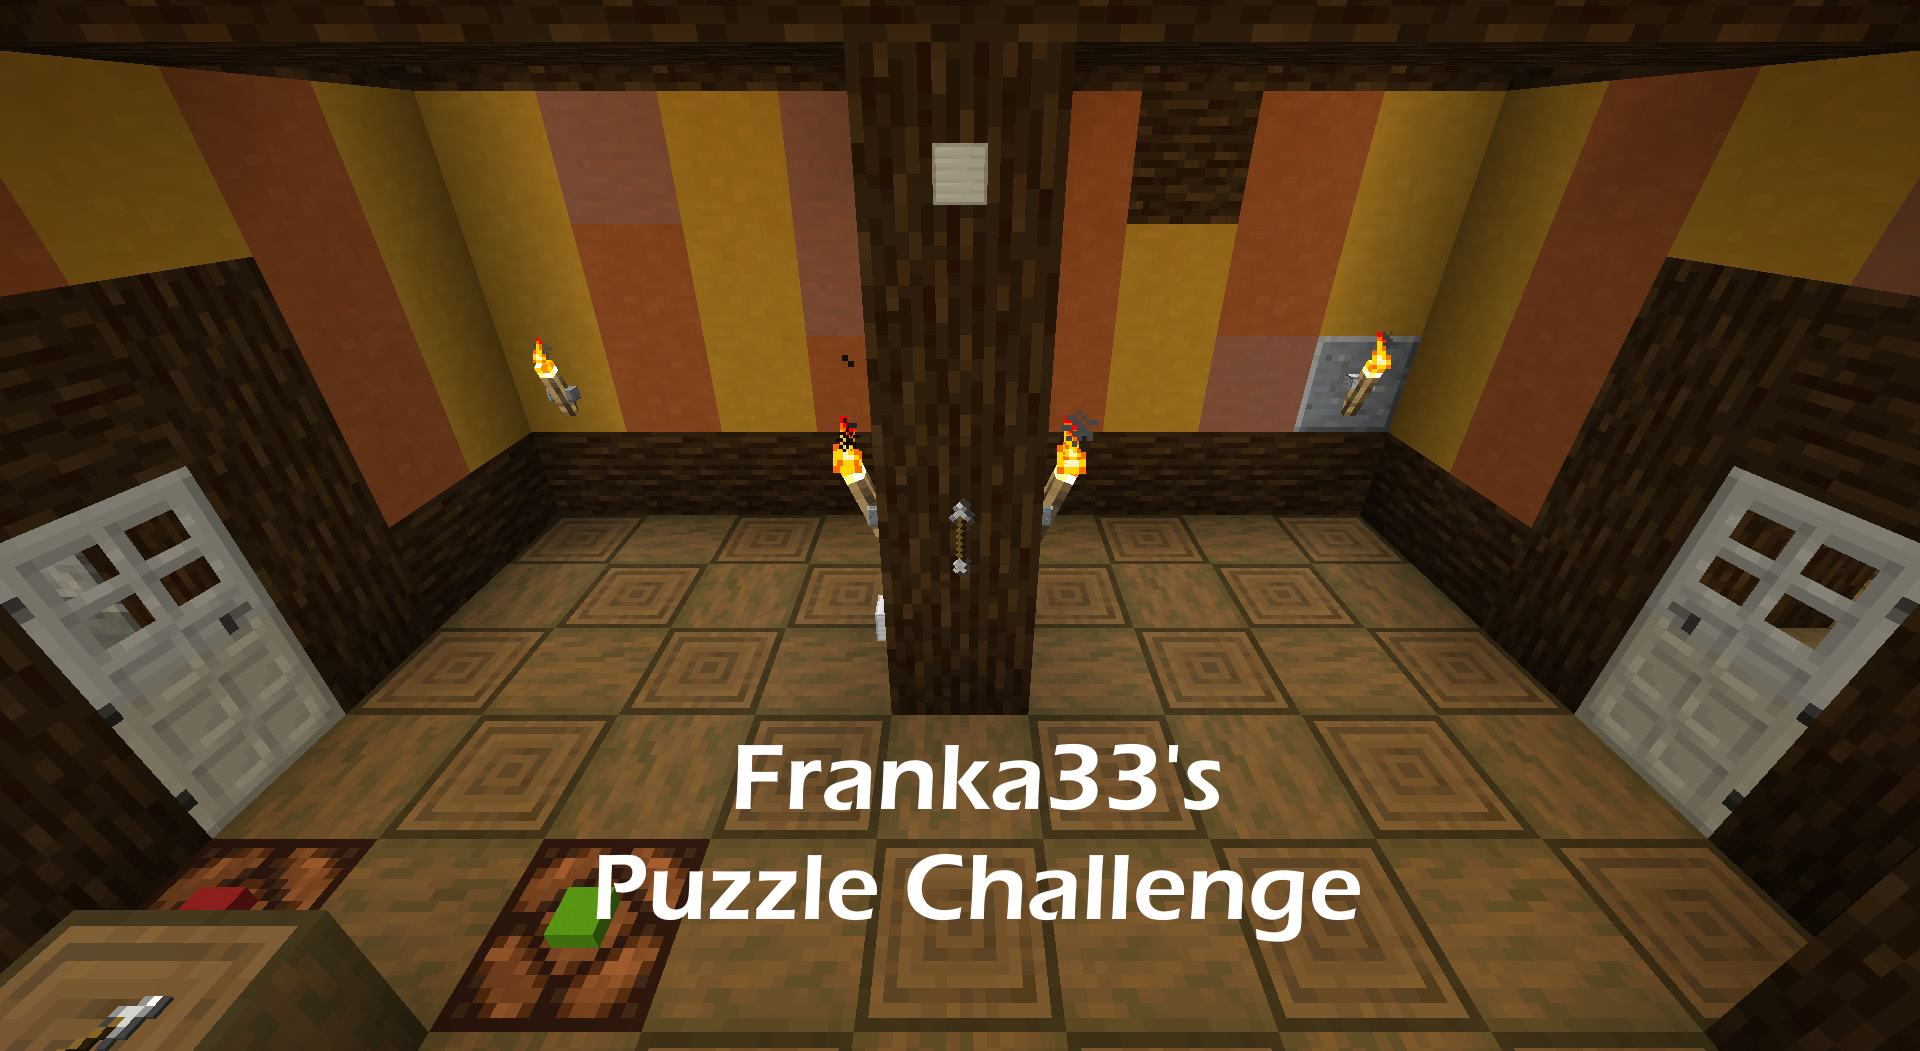 Download Franka33's Puzzle Challenge for Minecraft 1.16.5